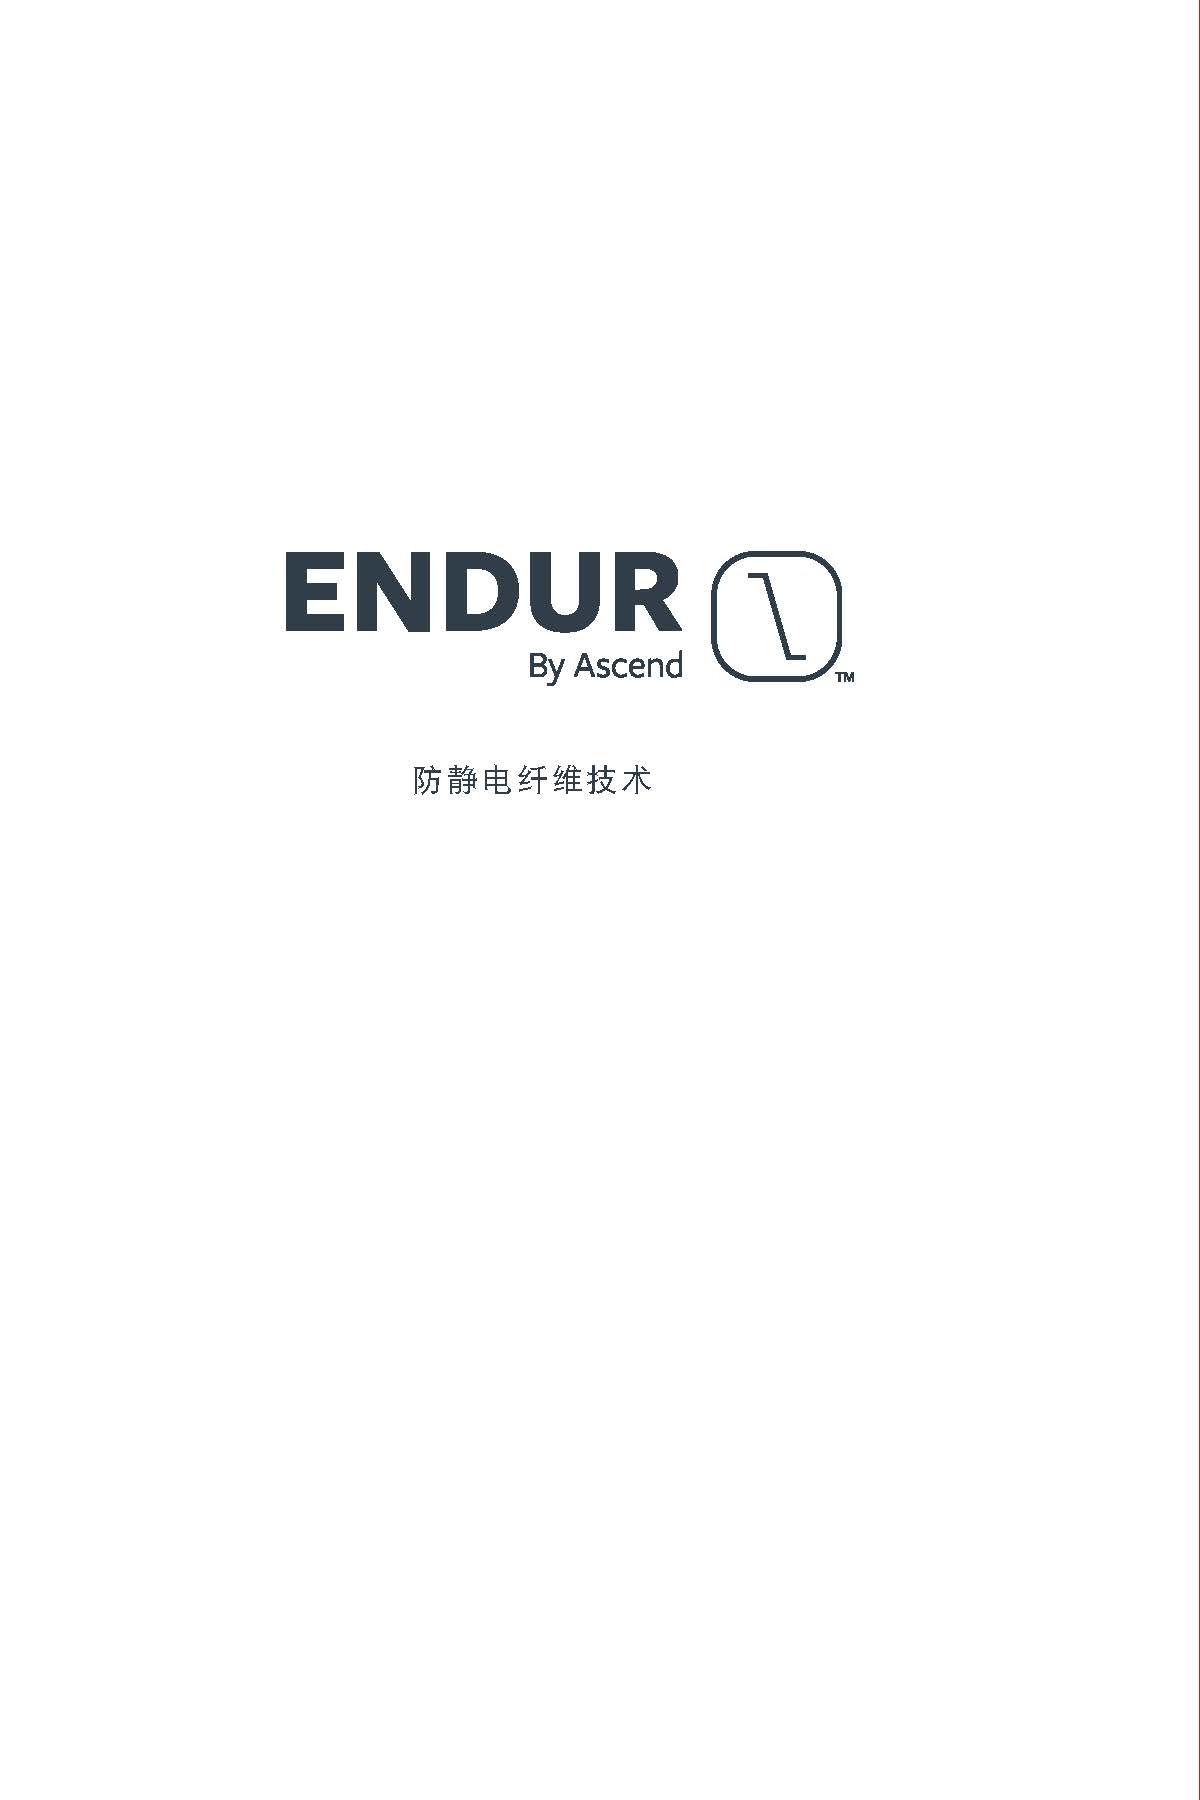 ENDUR by Ascend® 防静电纤维技术